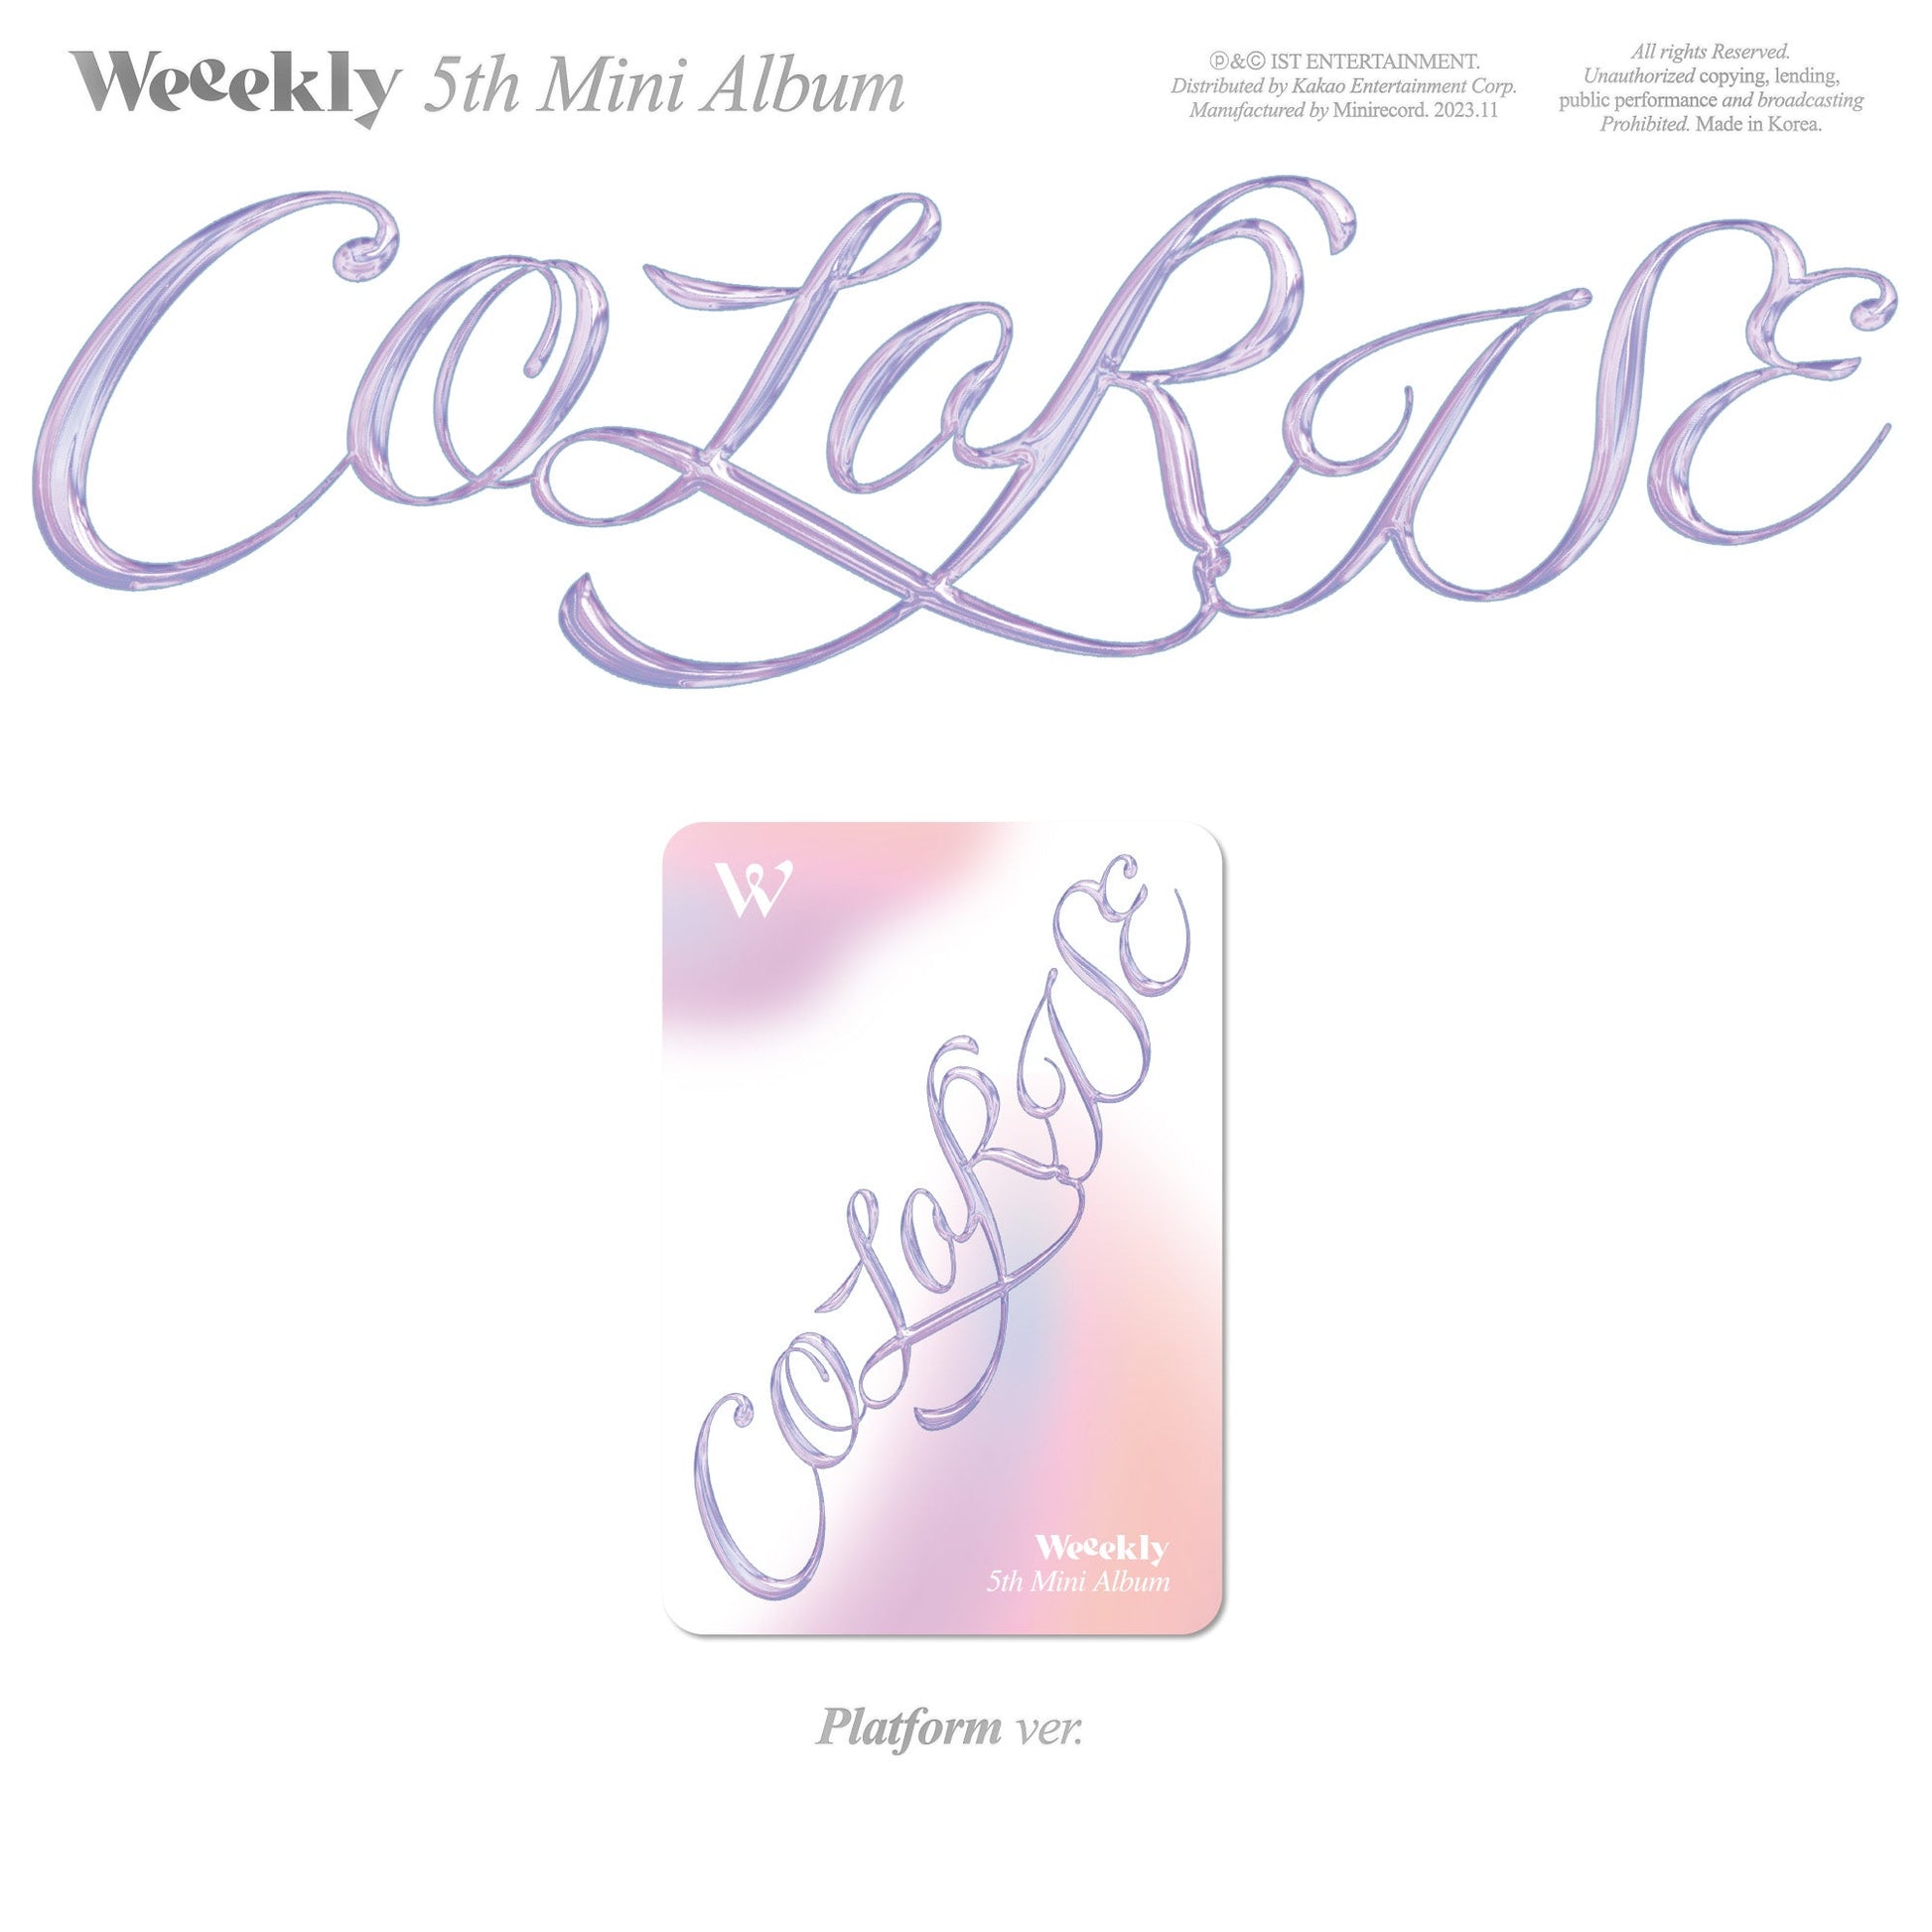 WEEEKLY 5TH MINI ALBUM 'COLORISE' (PLATFORM) COVER